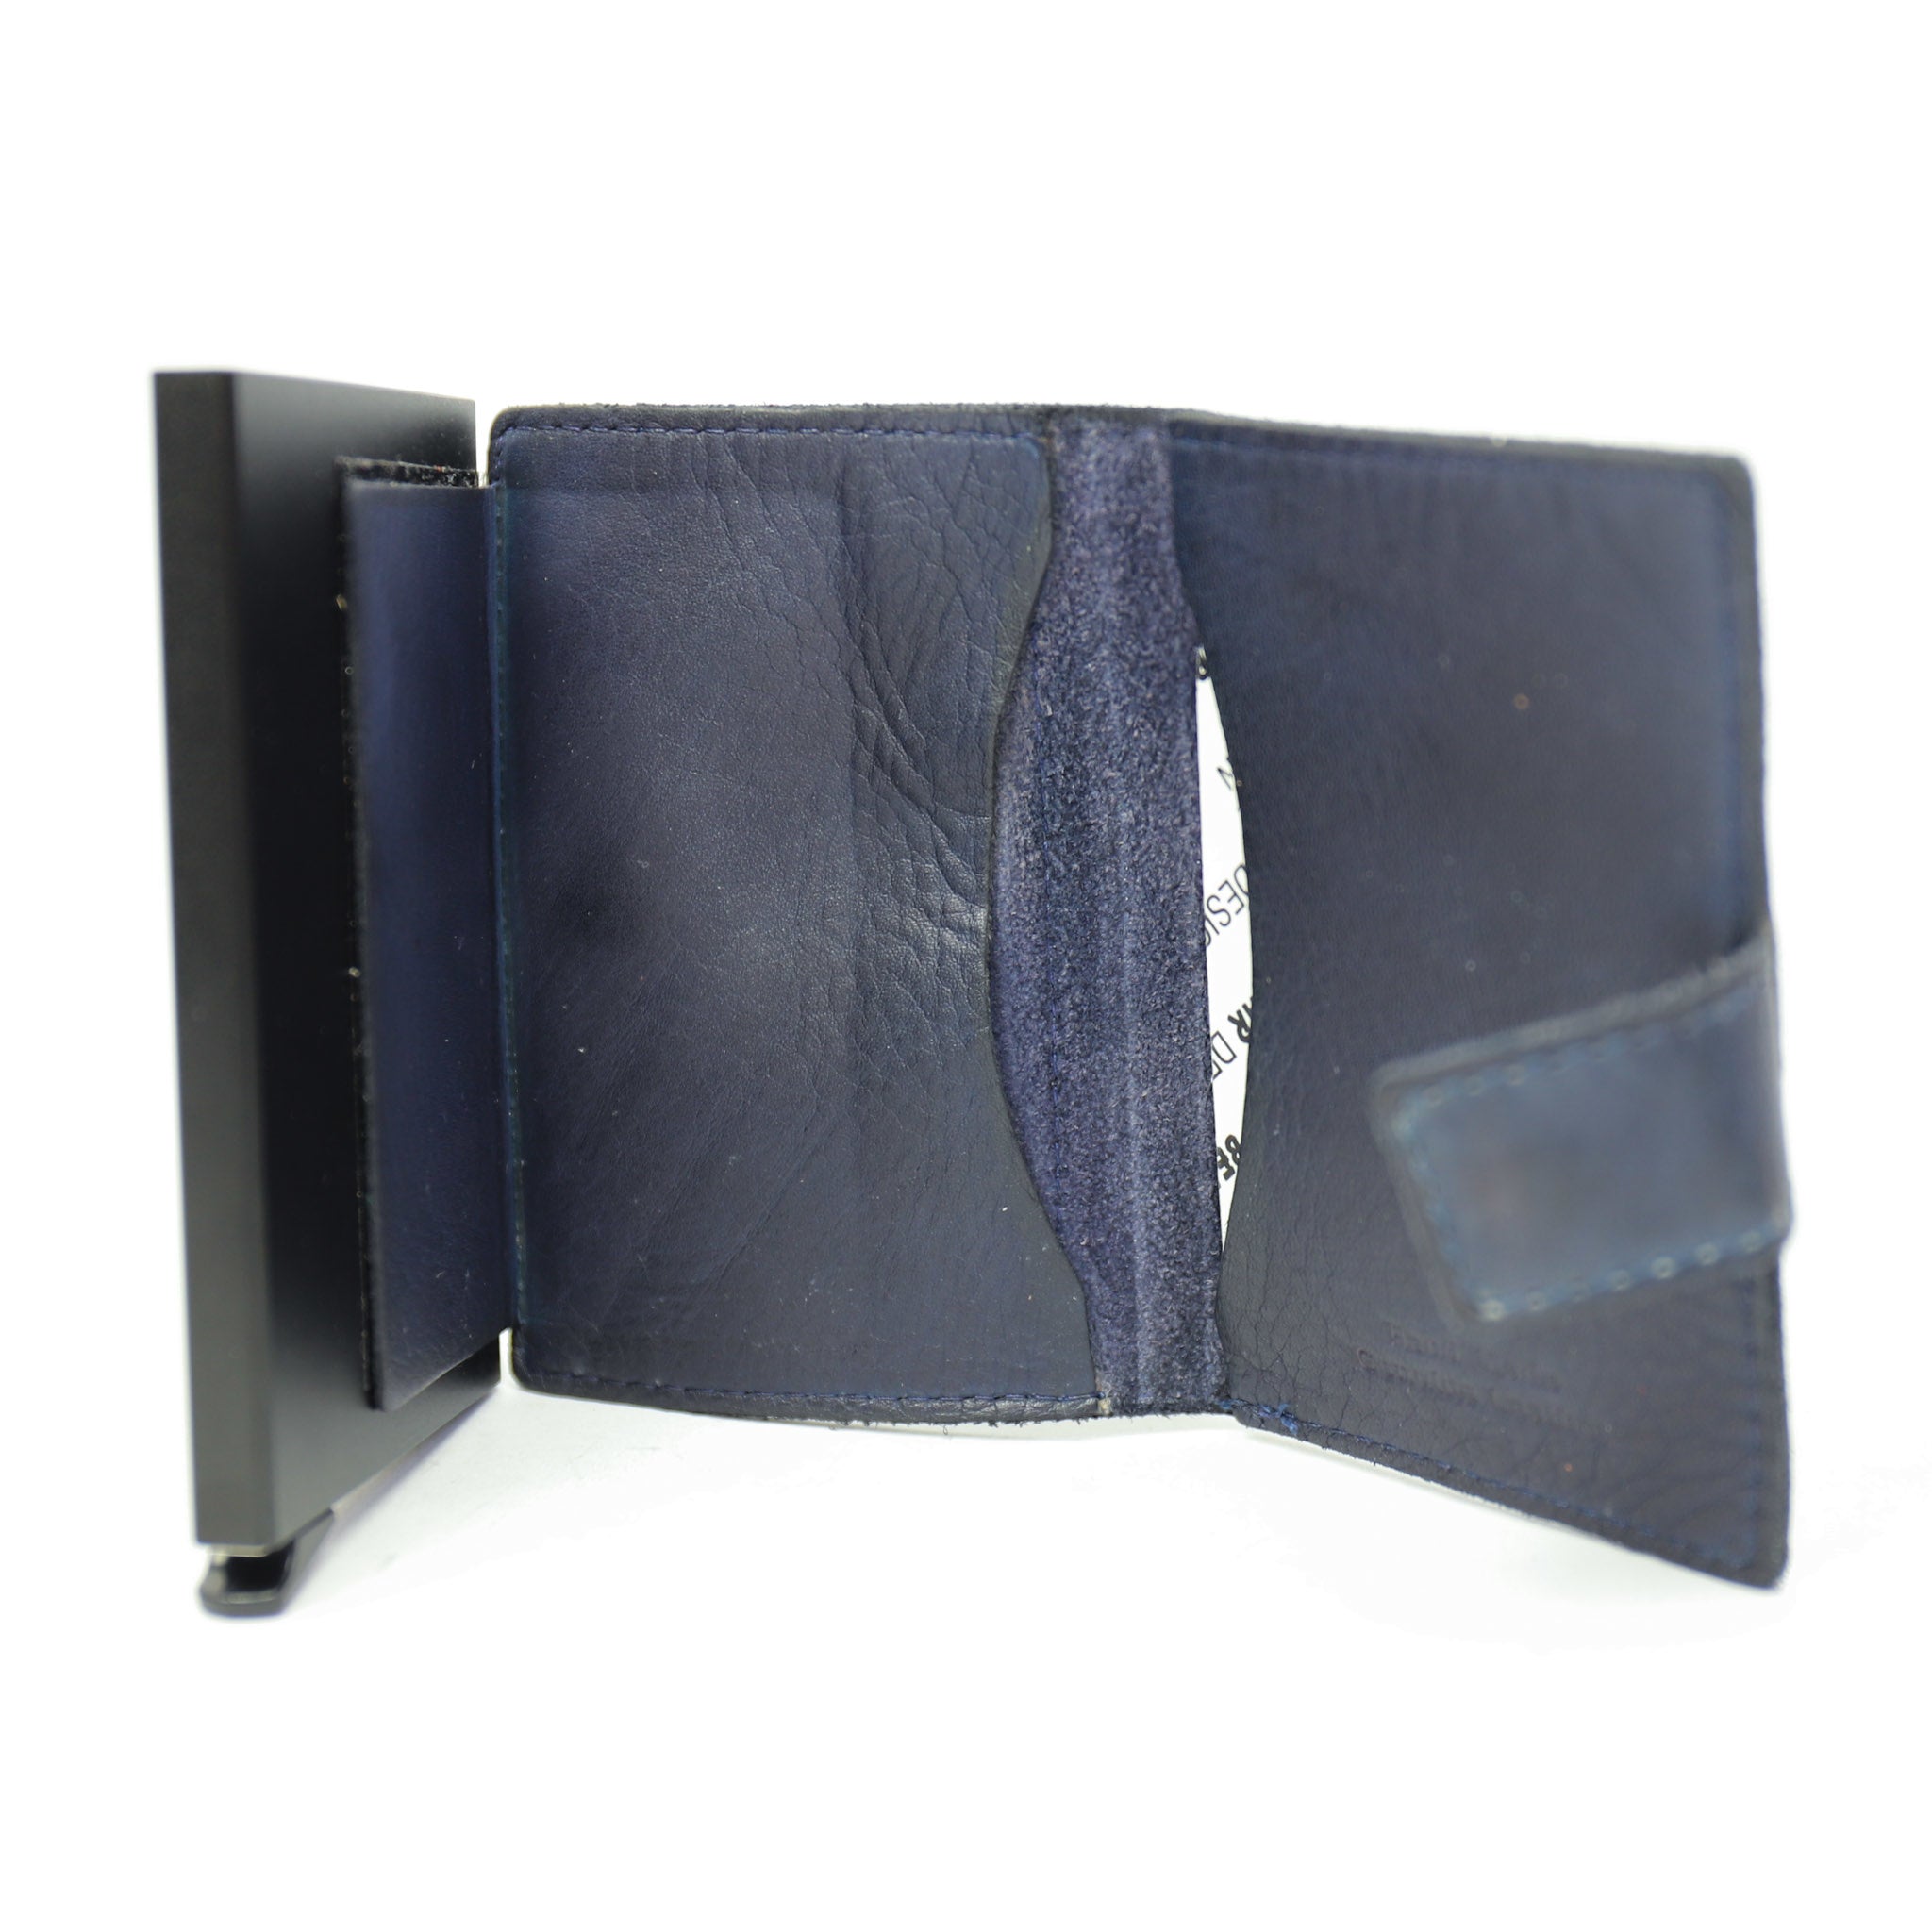 Card holder 'Pip' blue - CL 15254